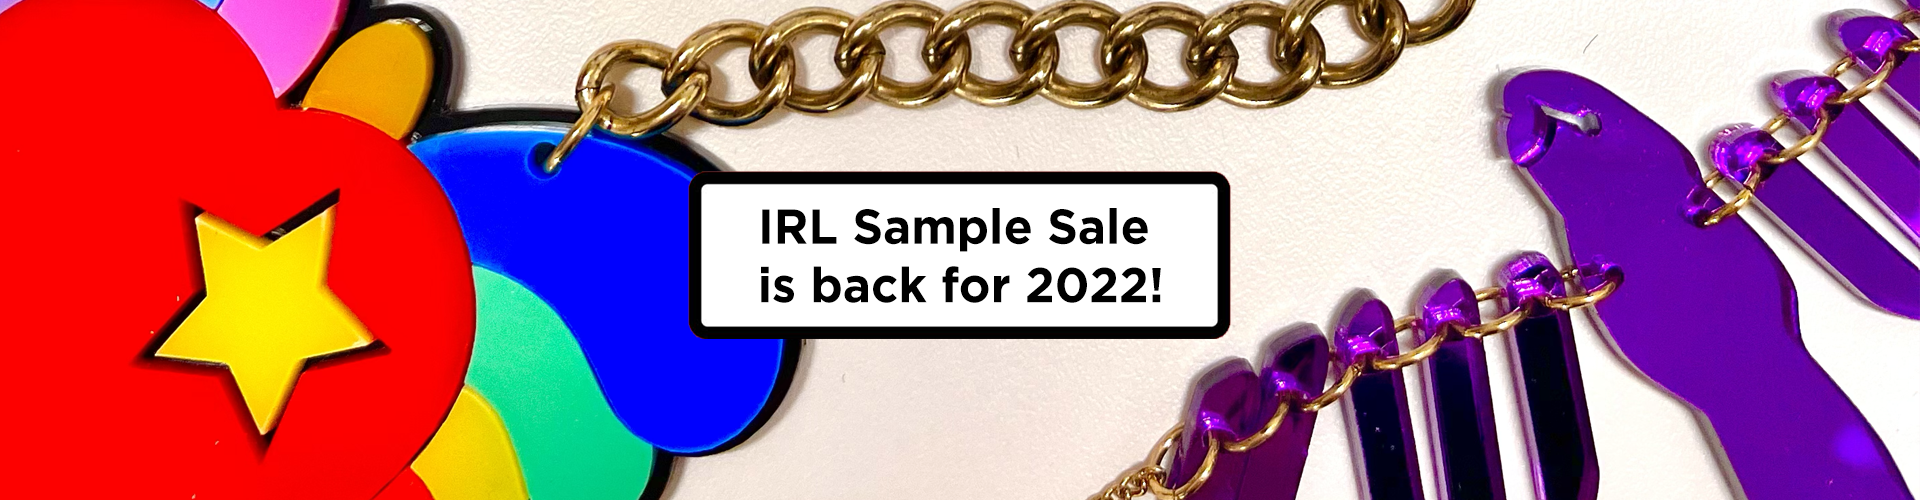 IRL Sample Sale is back for 2022!